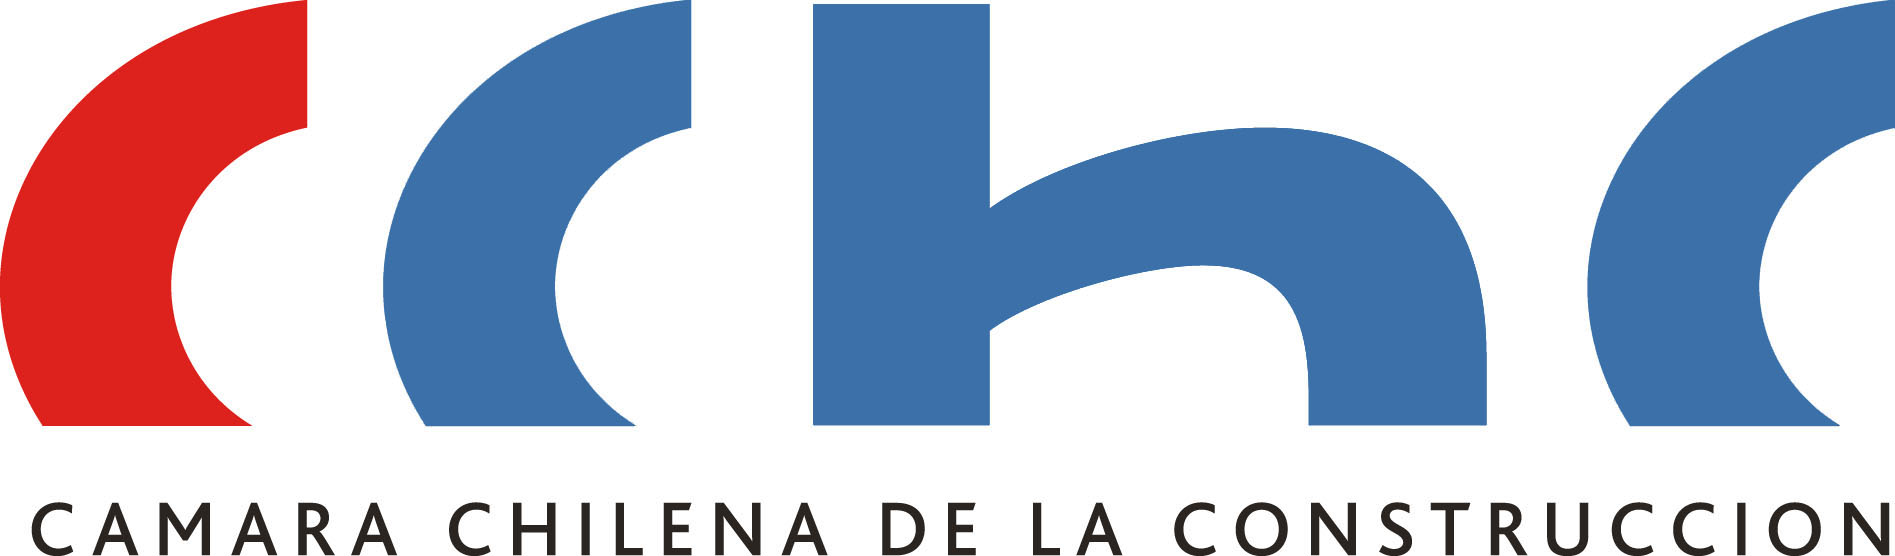 Logo-CChC.jpg